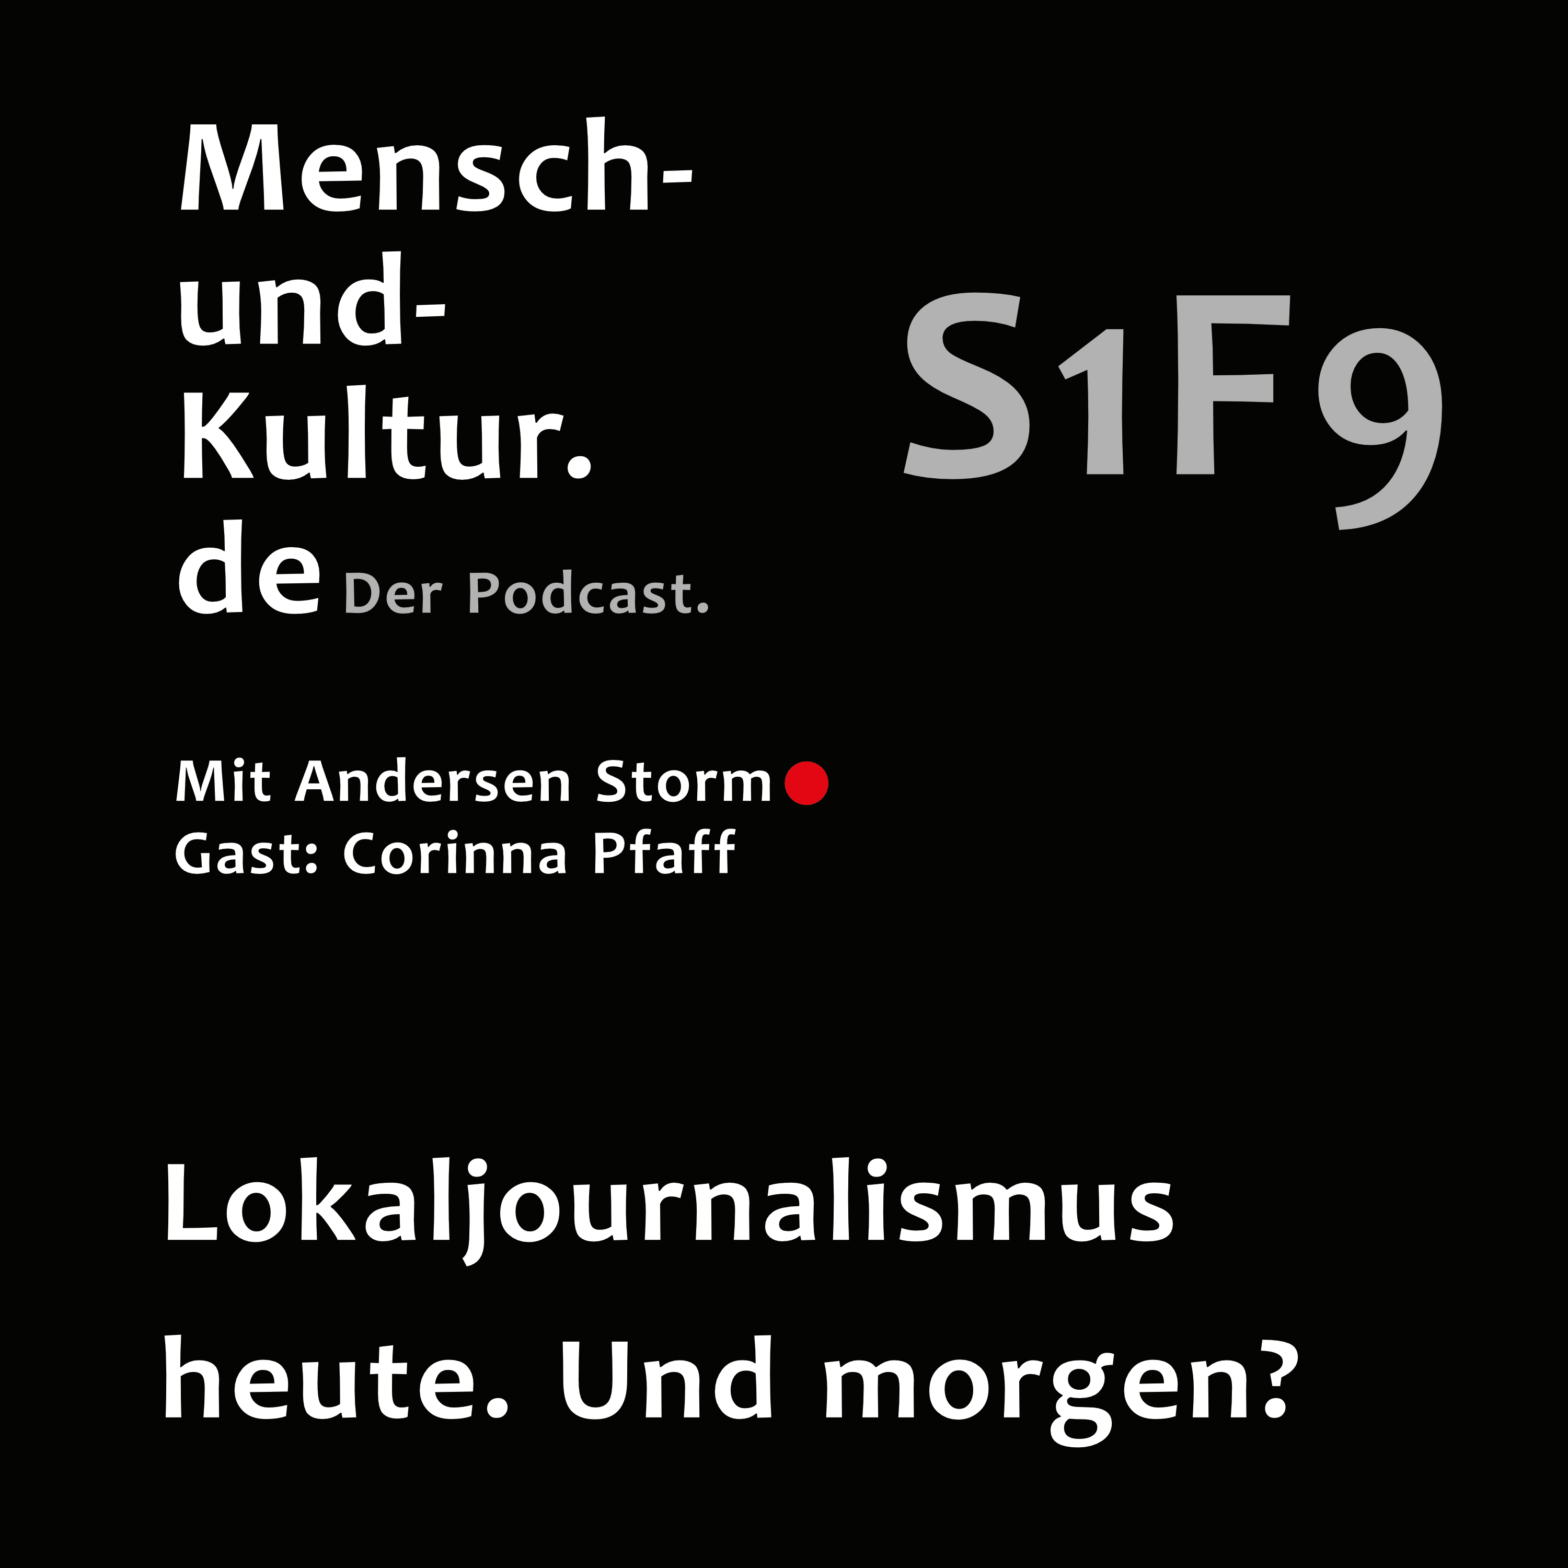 Podcastepisode S1F9, Mensch-und-Kultur.de - der Podcast